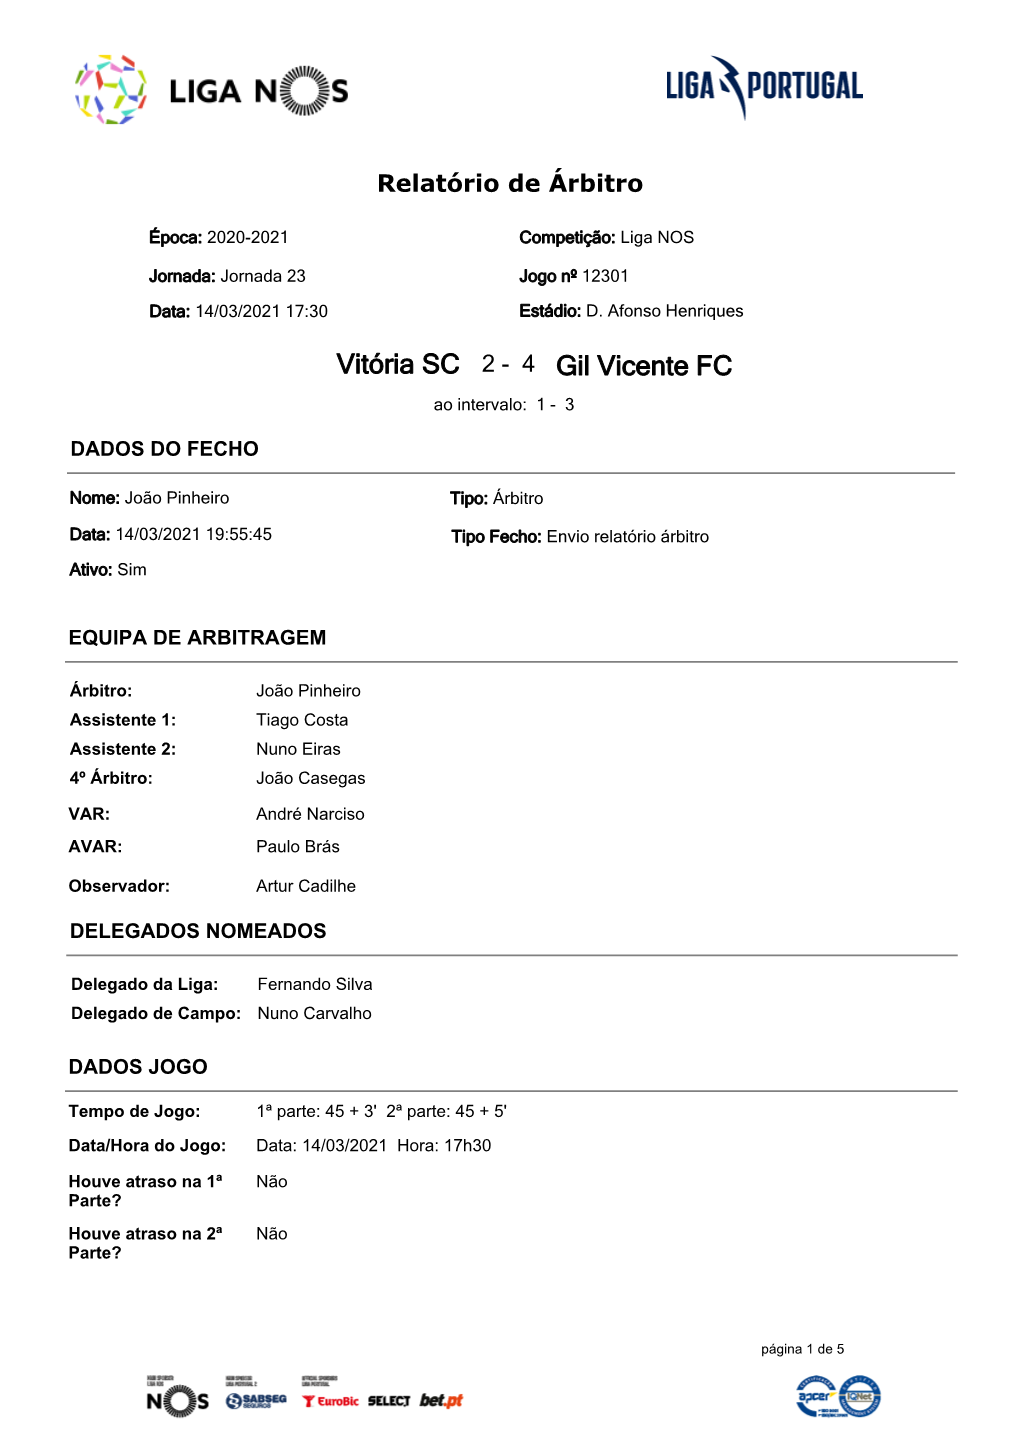 Vitória SC 2 - 4 Gil Vicente FC Ao Intervalo: 1 - 3